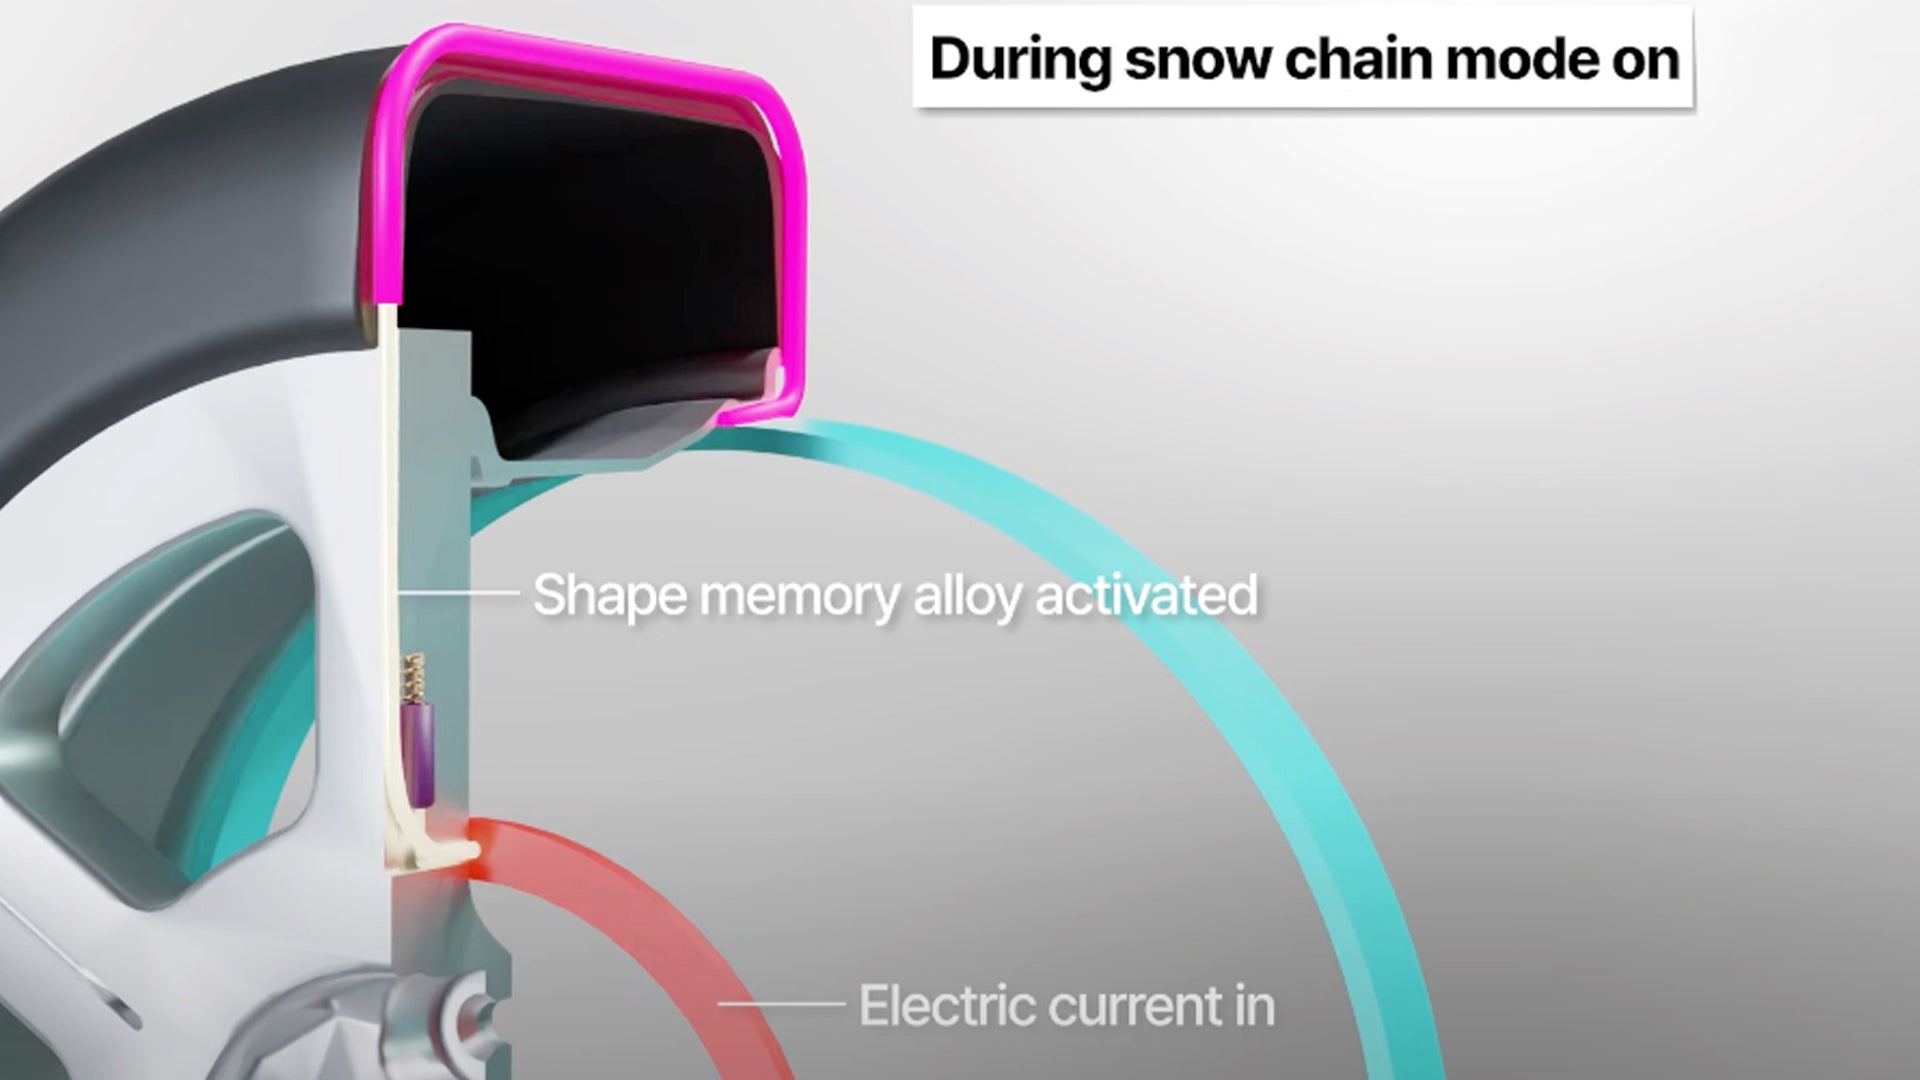 Hyundai and Kia reveal new snow chain tyre technology